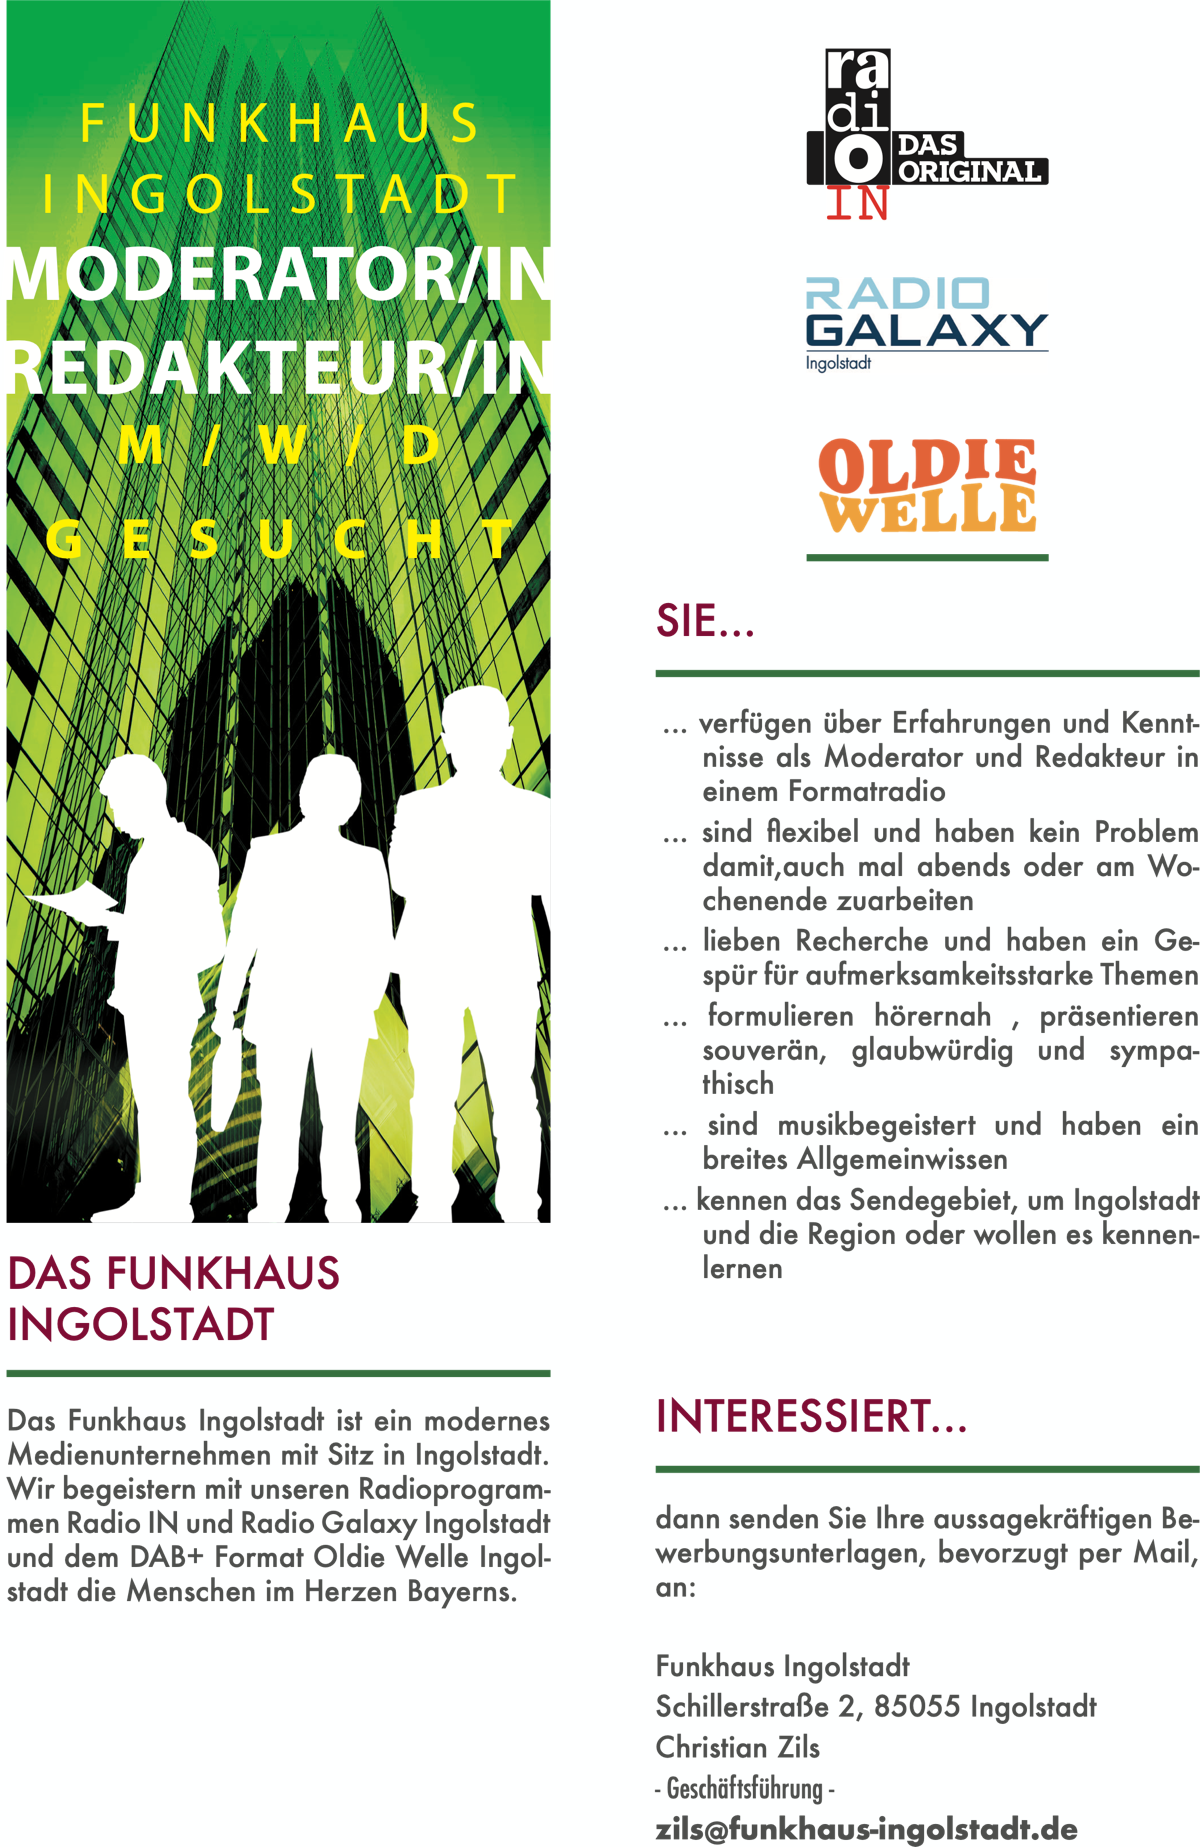 Funkhaus Ingolstadt sucht Moderator/in Redakteur/in (m/w/d)